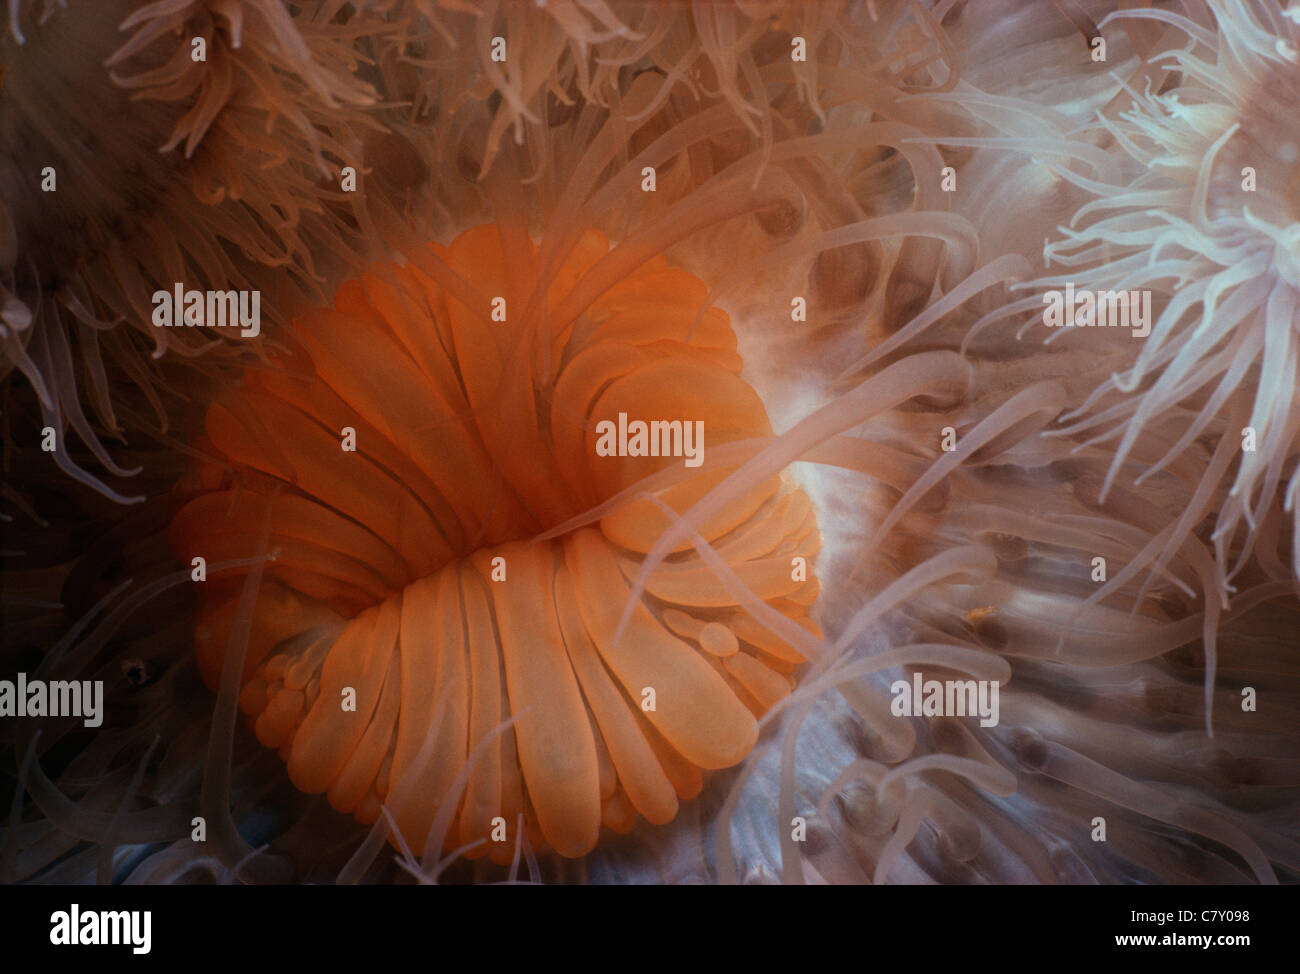 Mund von einer Frilled Anemone (Metridium senile). Gloucester, New England, USA - Nord-Atlantik Stockfoto